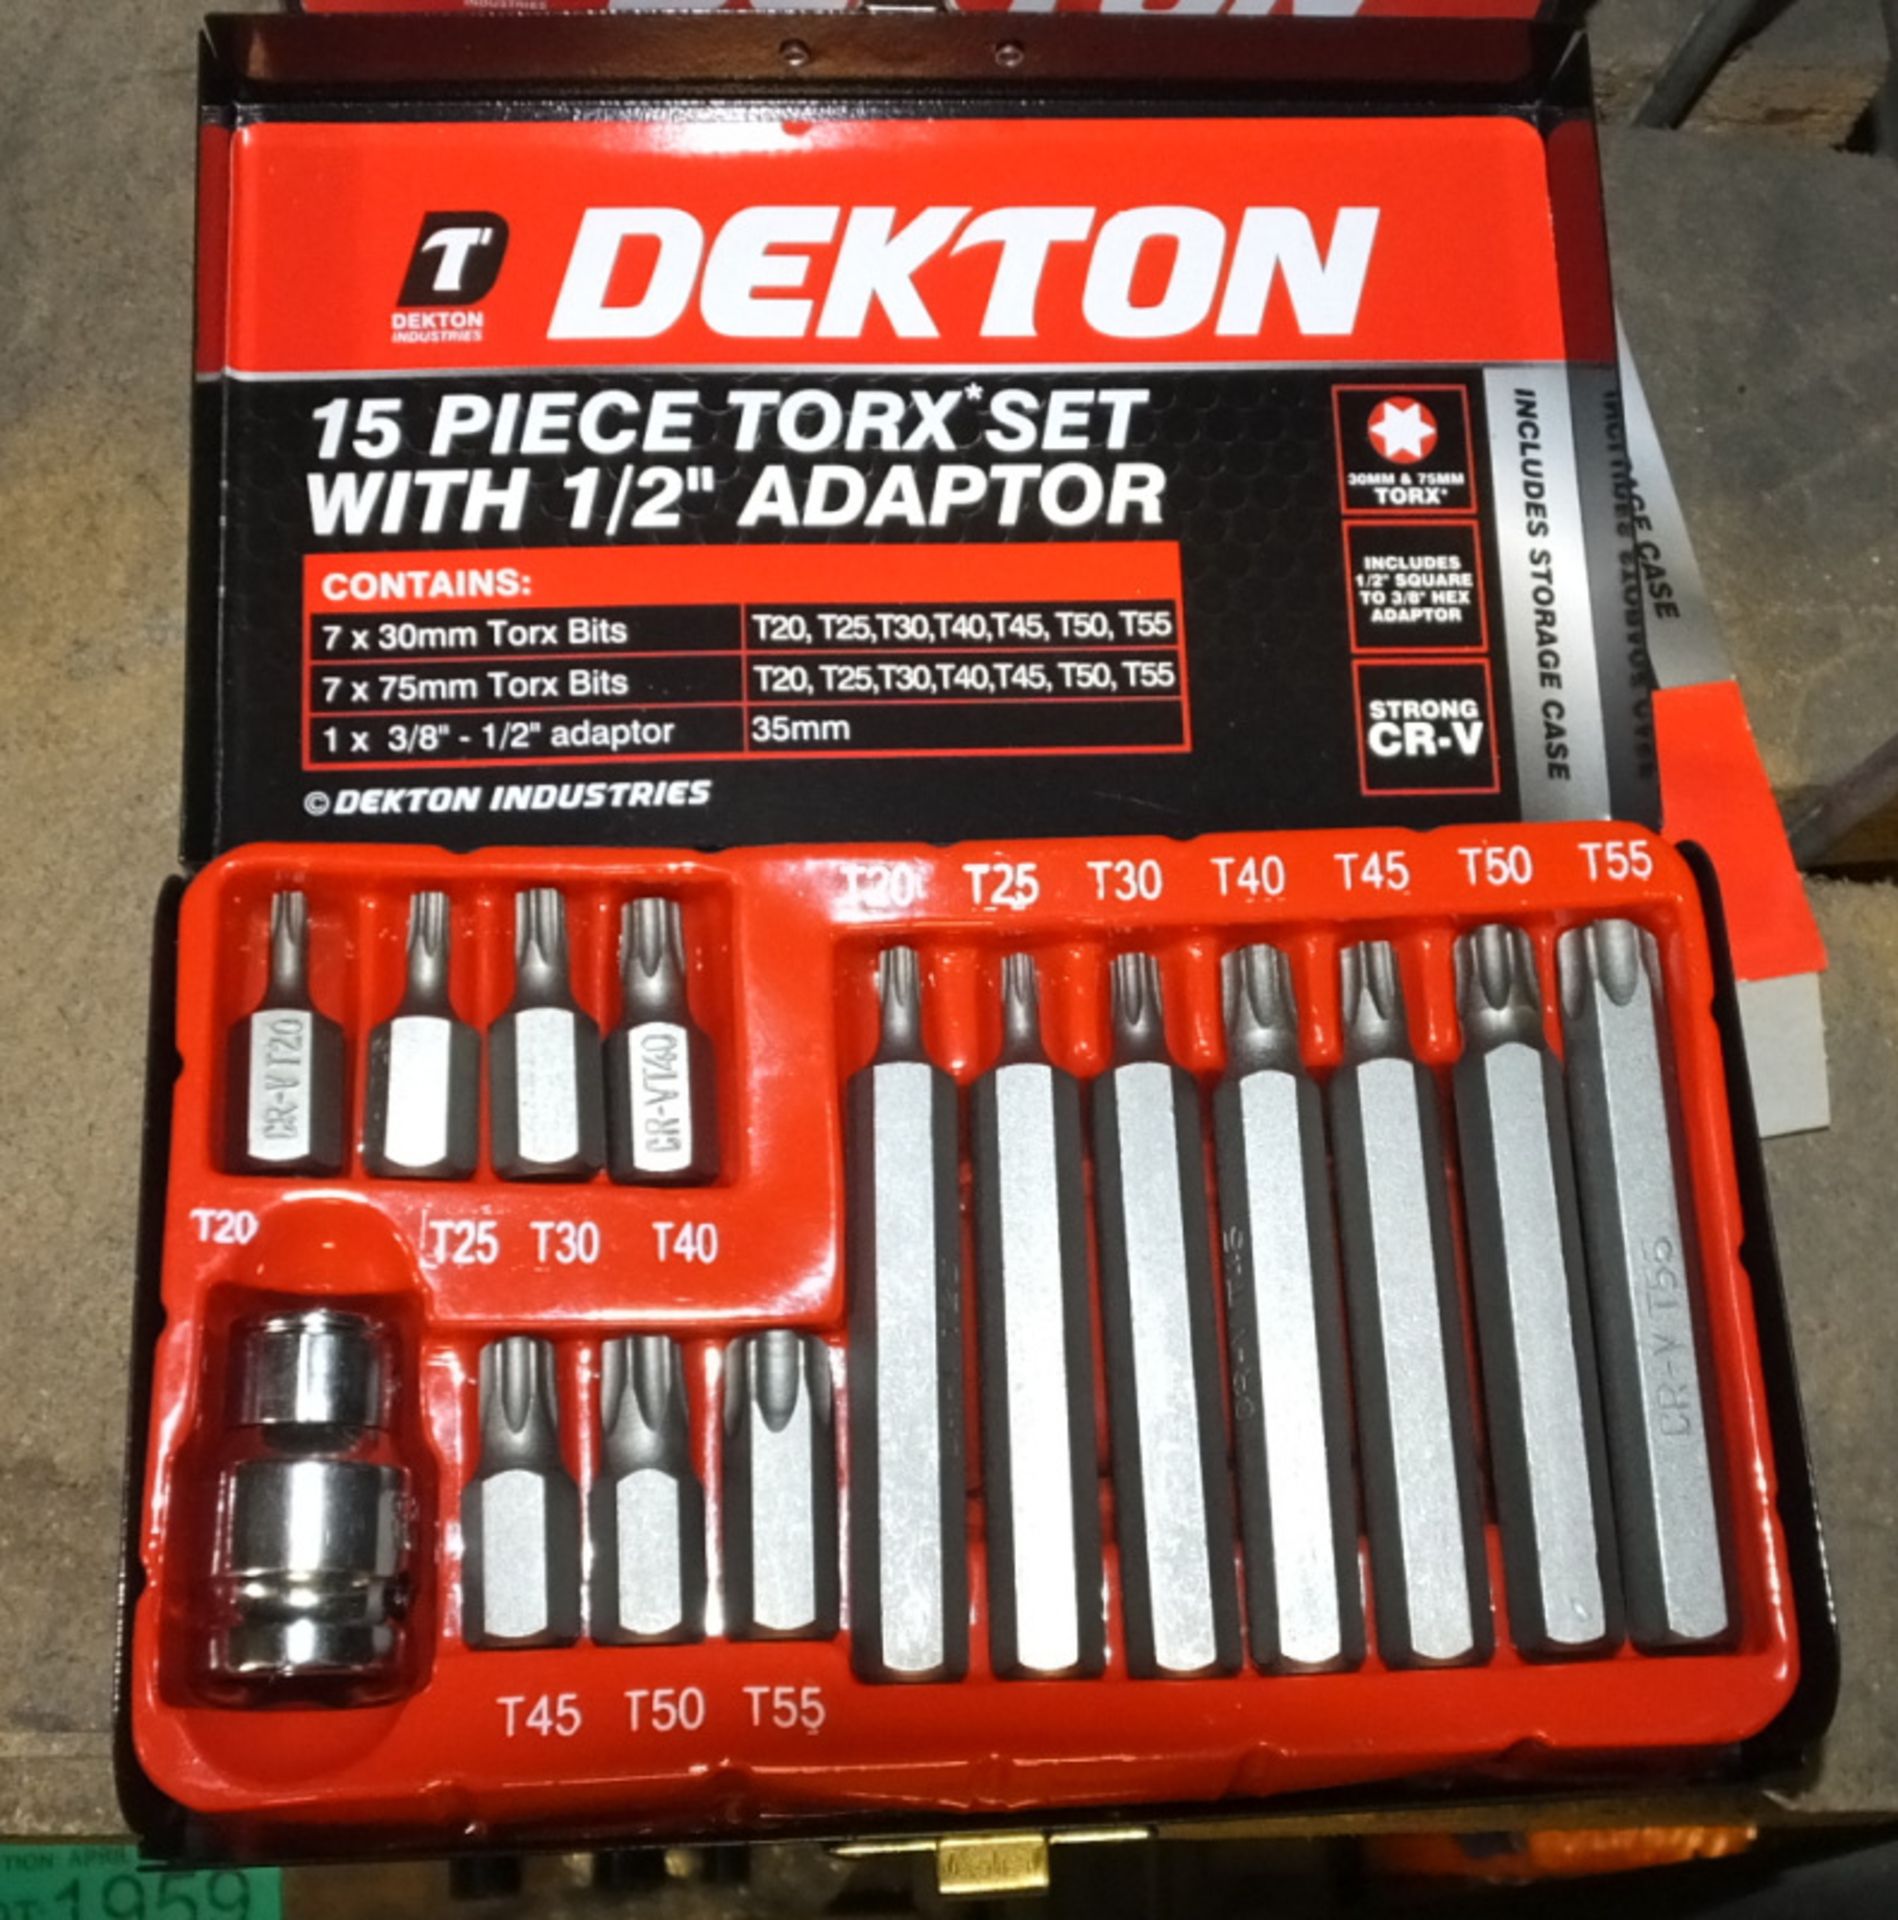 2x Dekton 15 piece Torx Sets with 1/2 inch adapter & 1x Dekton 11 Piece Spline Set - Image 2 of 2